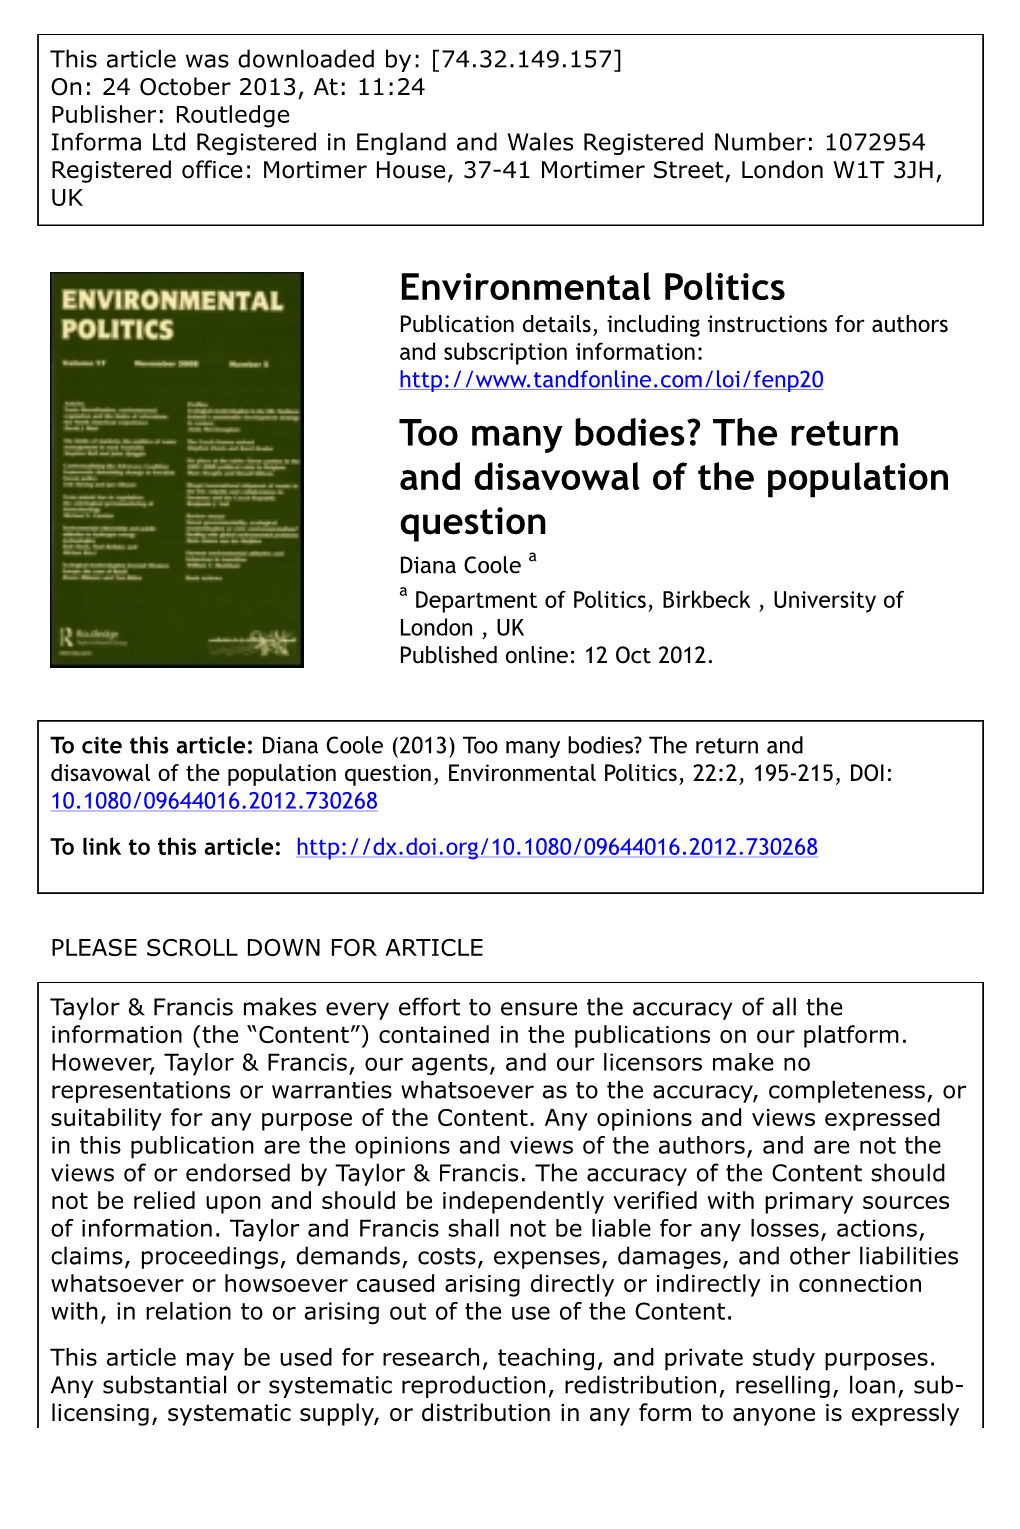 Coole a a Department of Politics, Birkbeck , University of London , UK Published Online: 12 Oct 2012